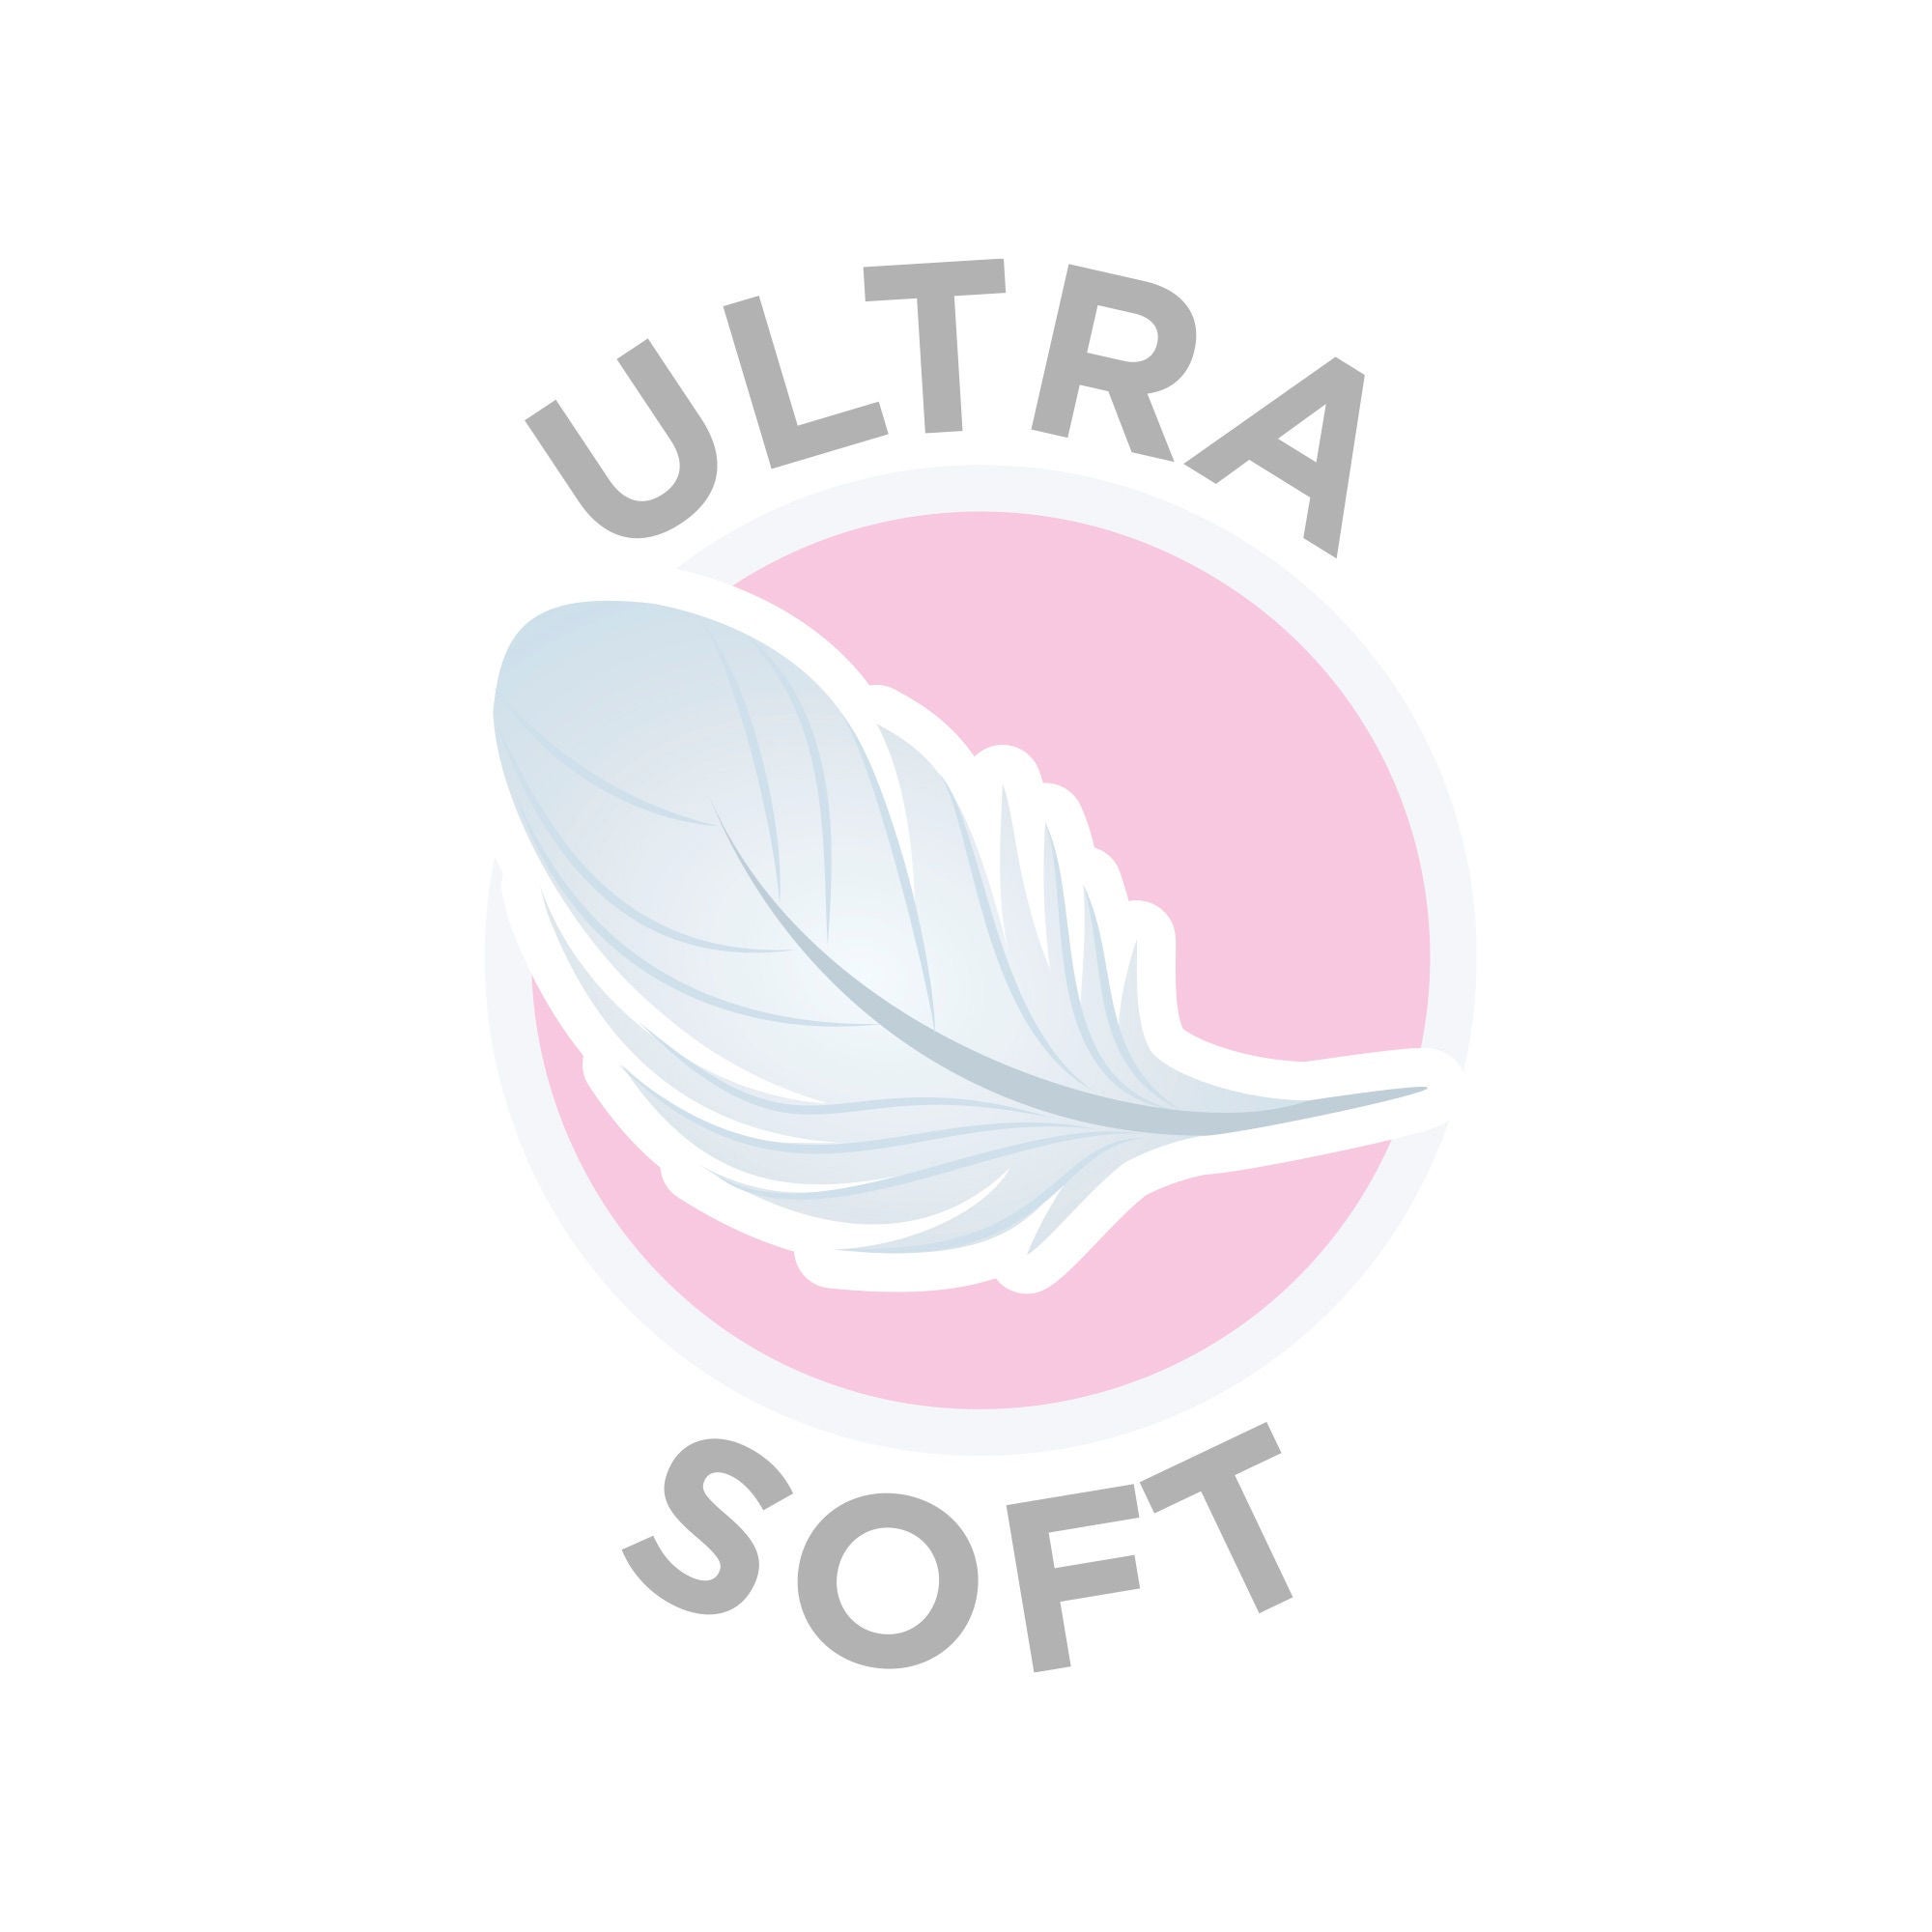 Illu-feather-icon-ultra-soft.jpg